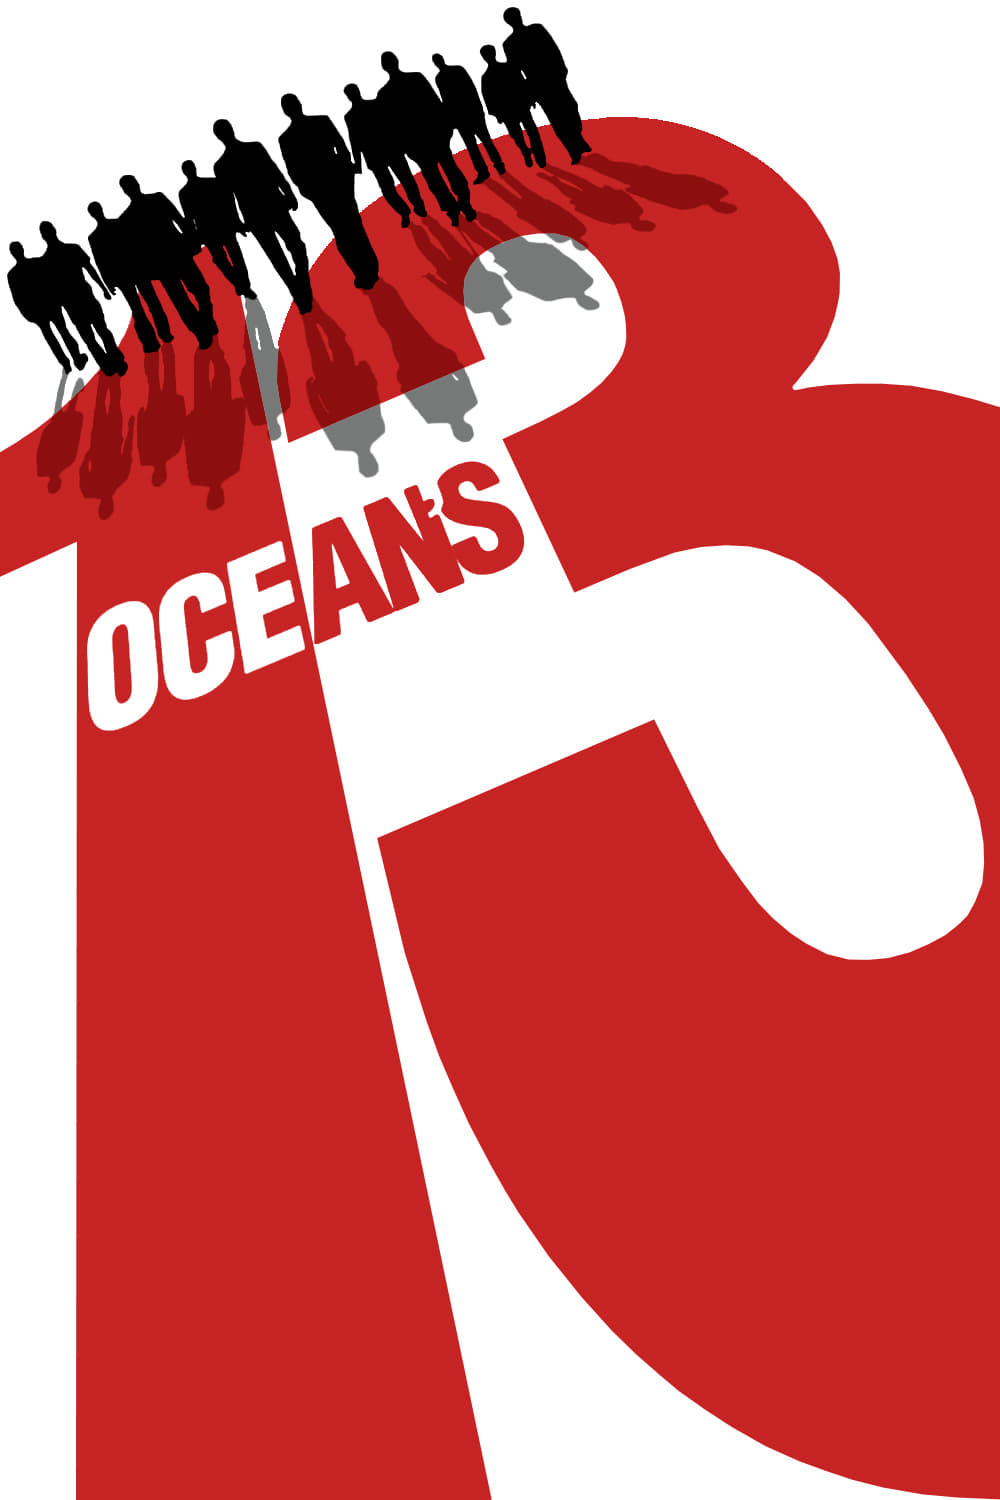 Ocean's Thirteen (2007)